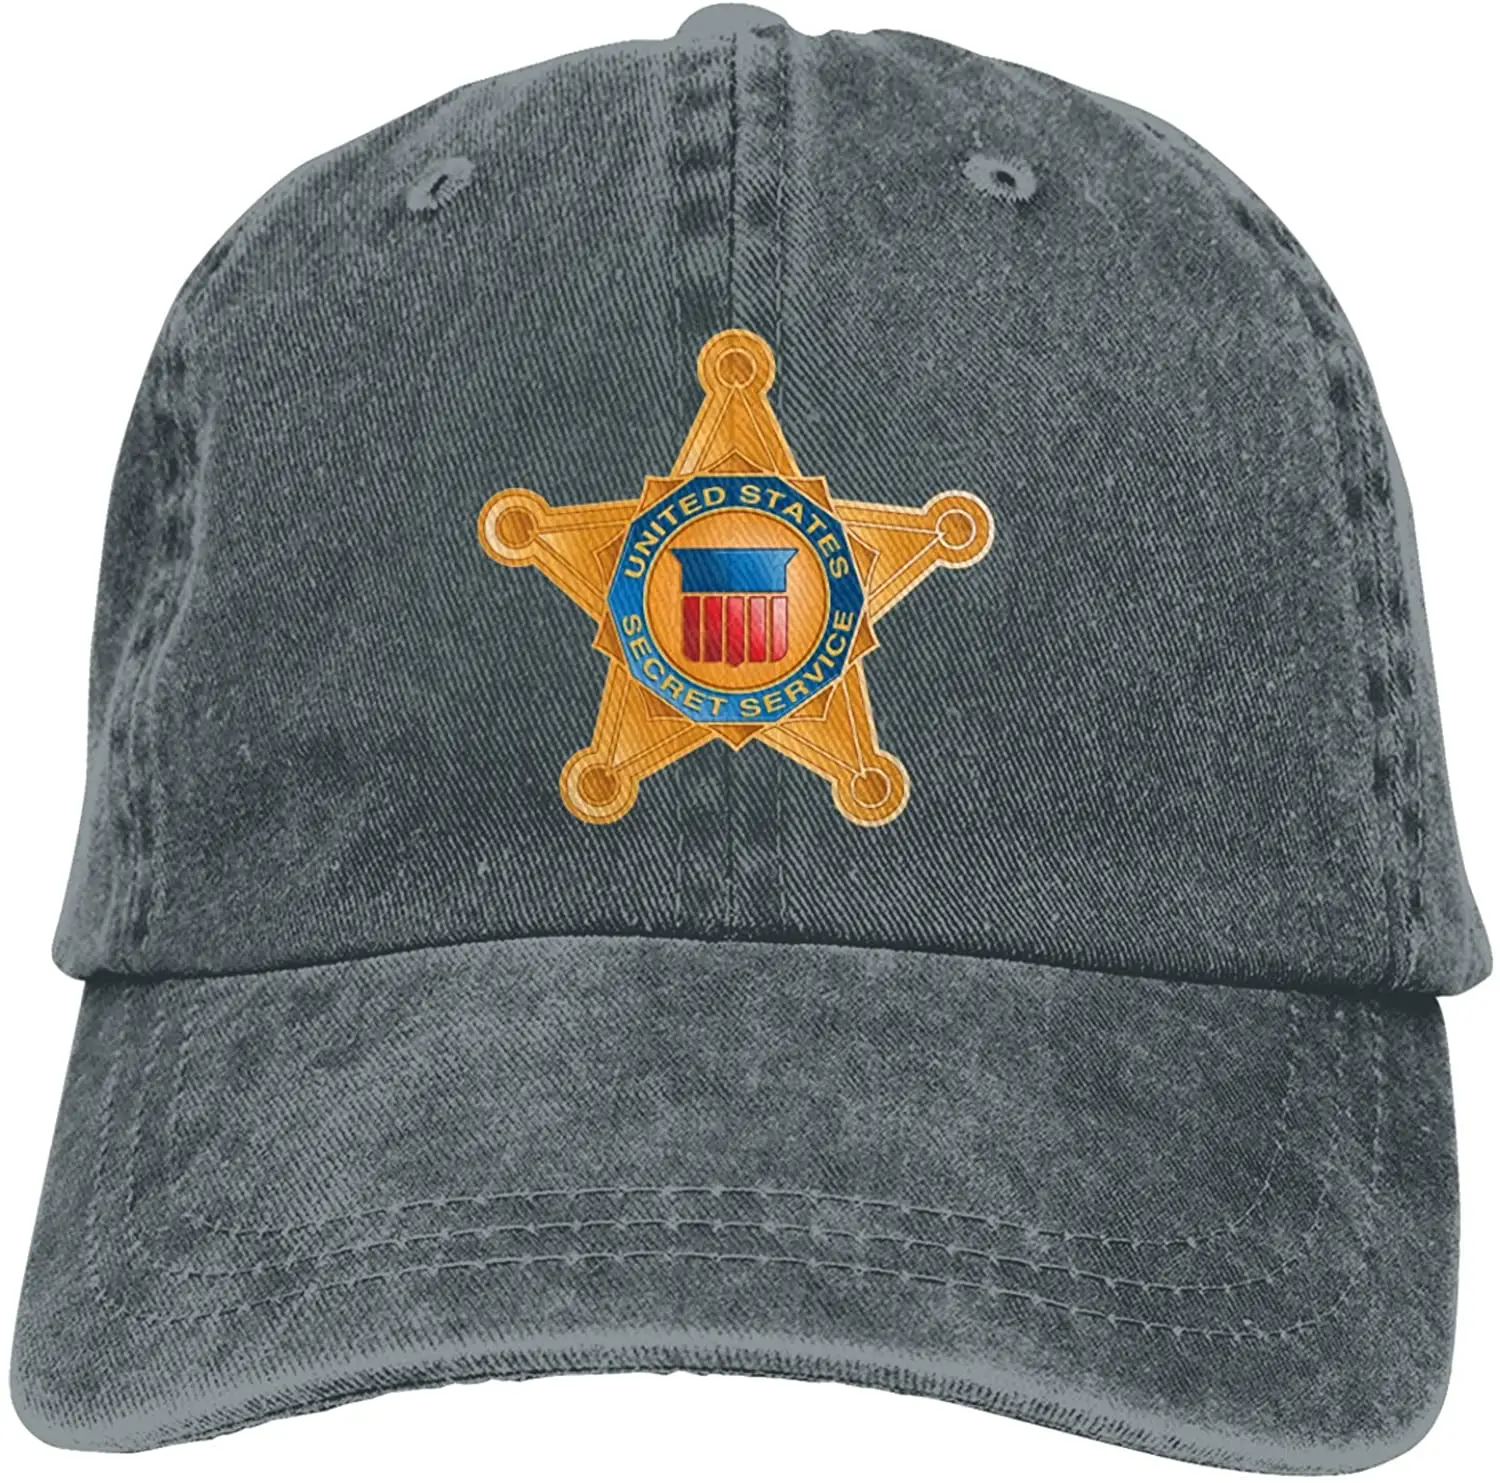 

United States Secret Service Denim Dad Hat Cotton Retro Baseball Cap Jeans Casquette Adjustable Trucker Caps